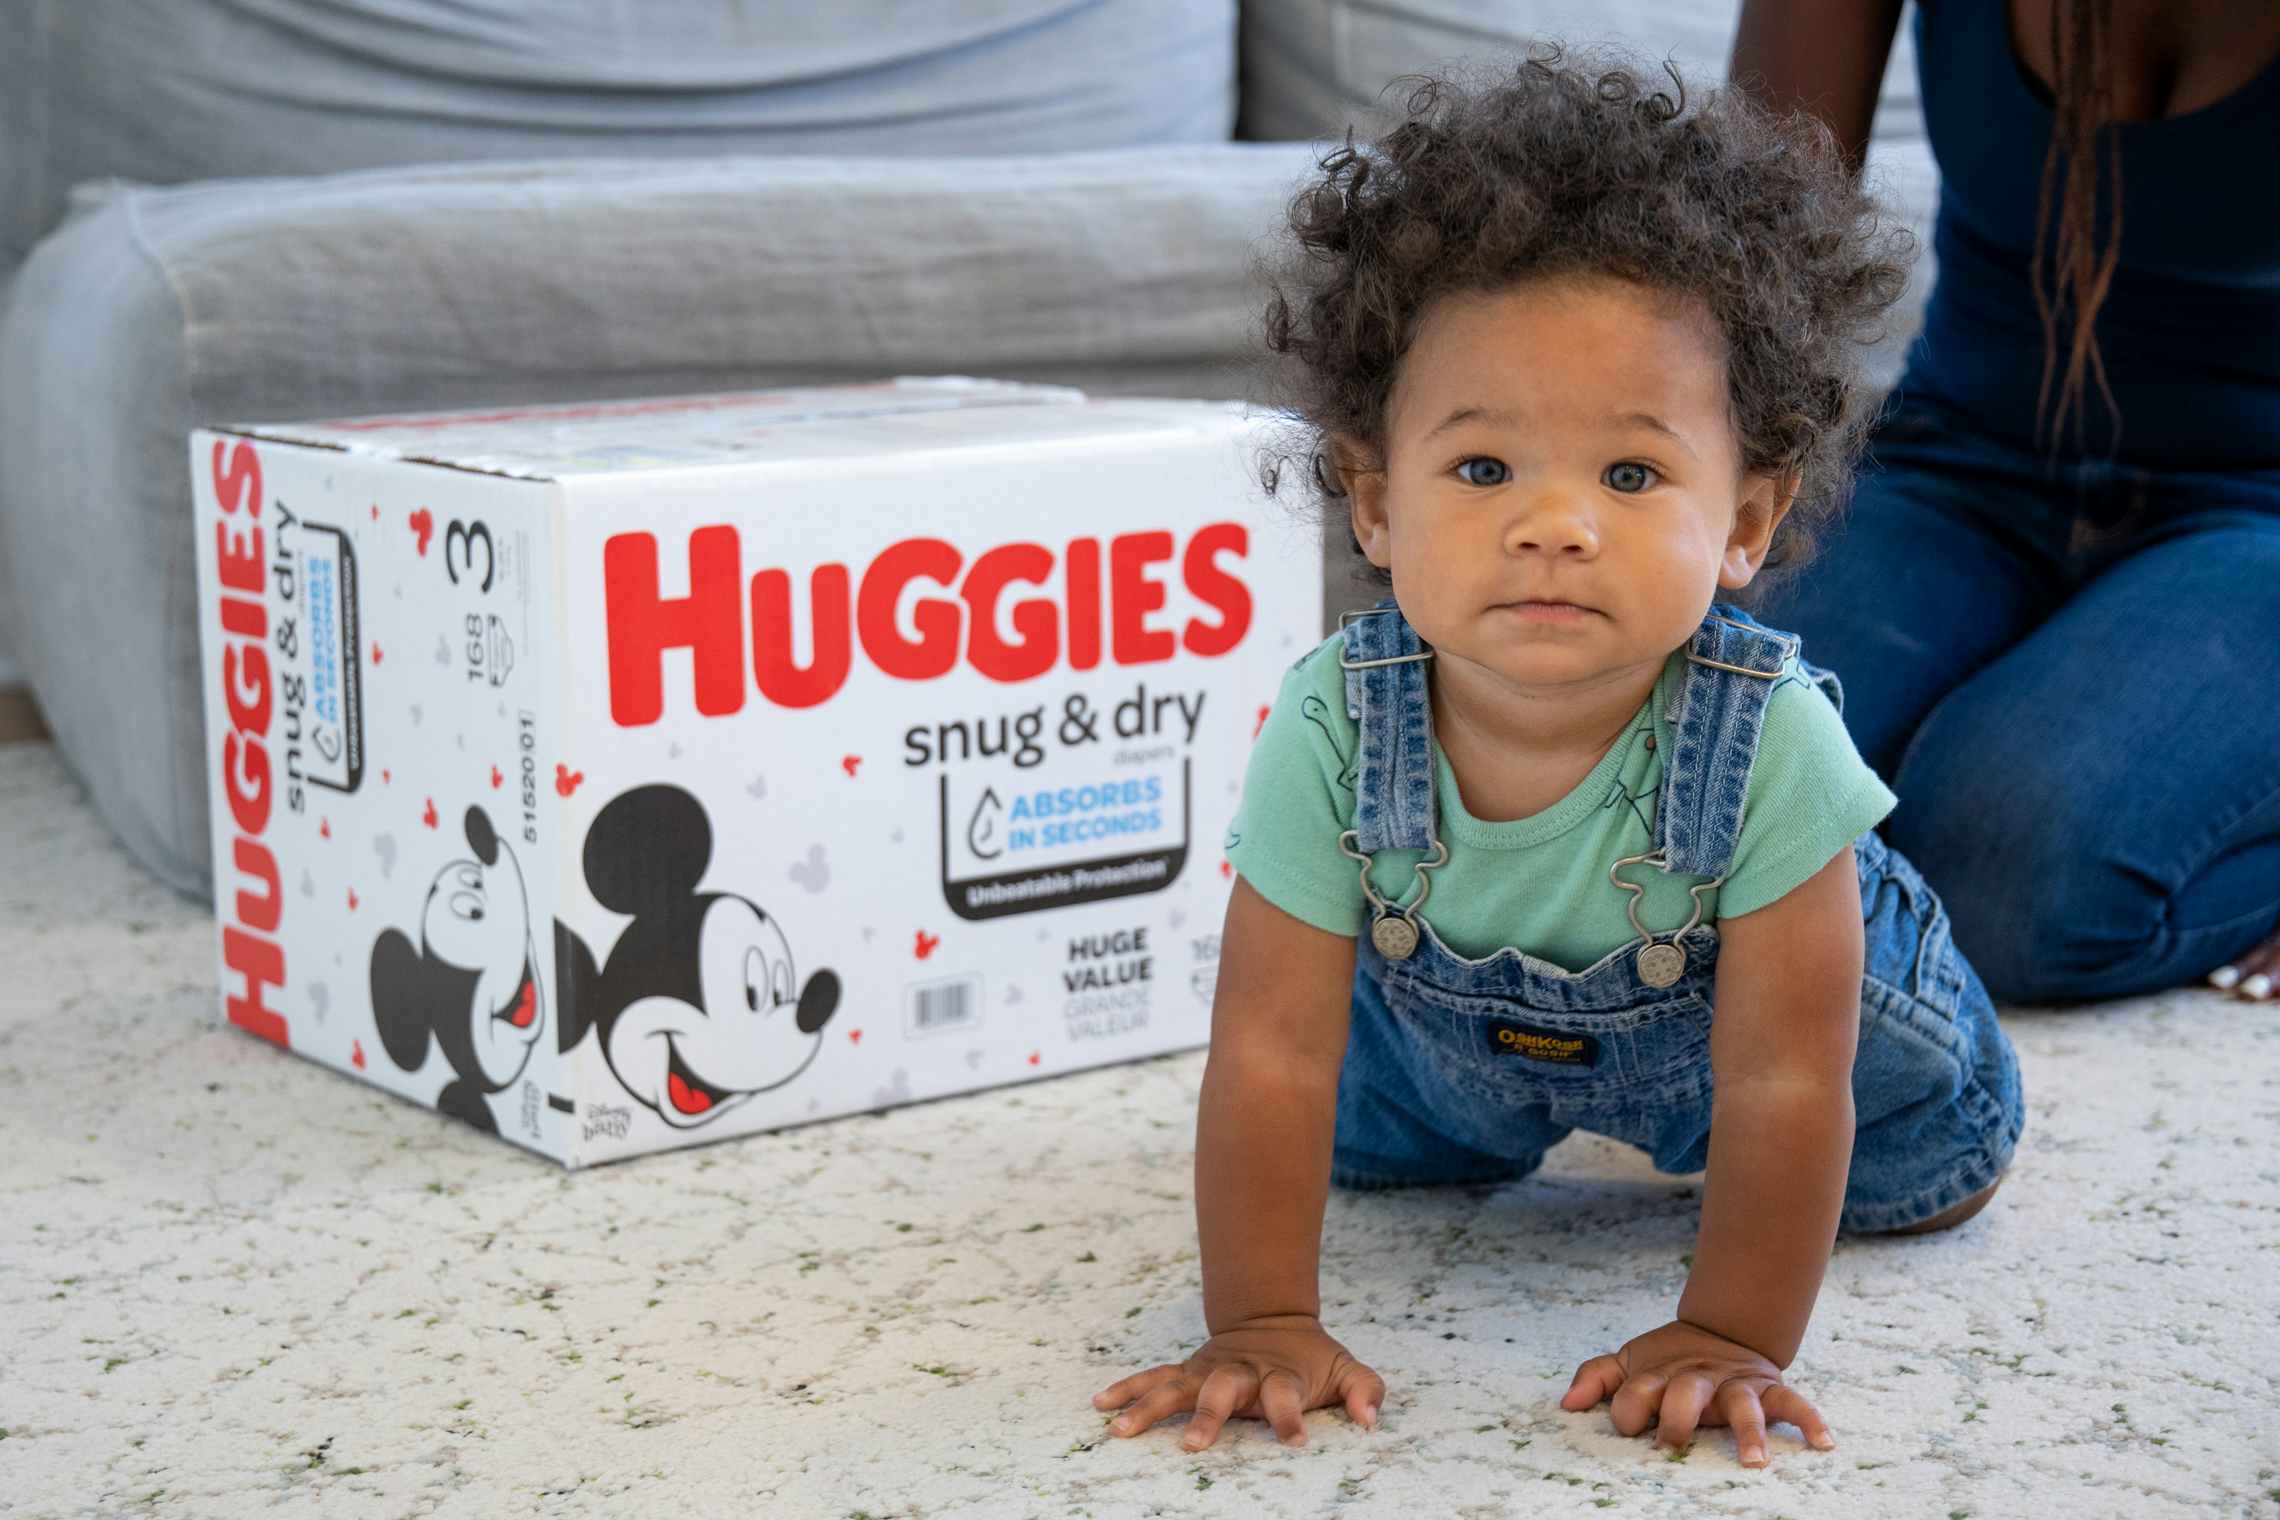 A little boy crawling next to a huggies diaper box.